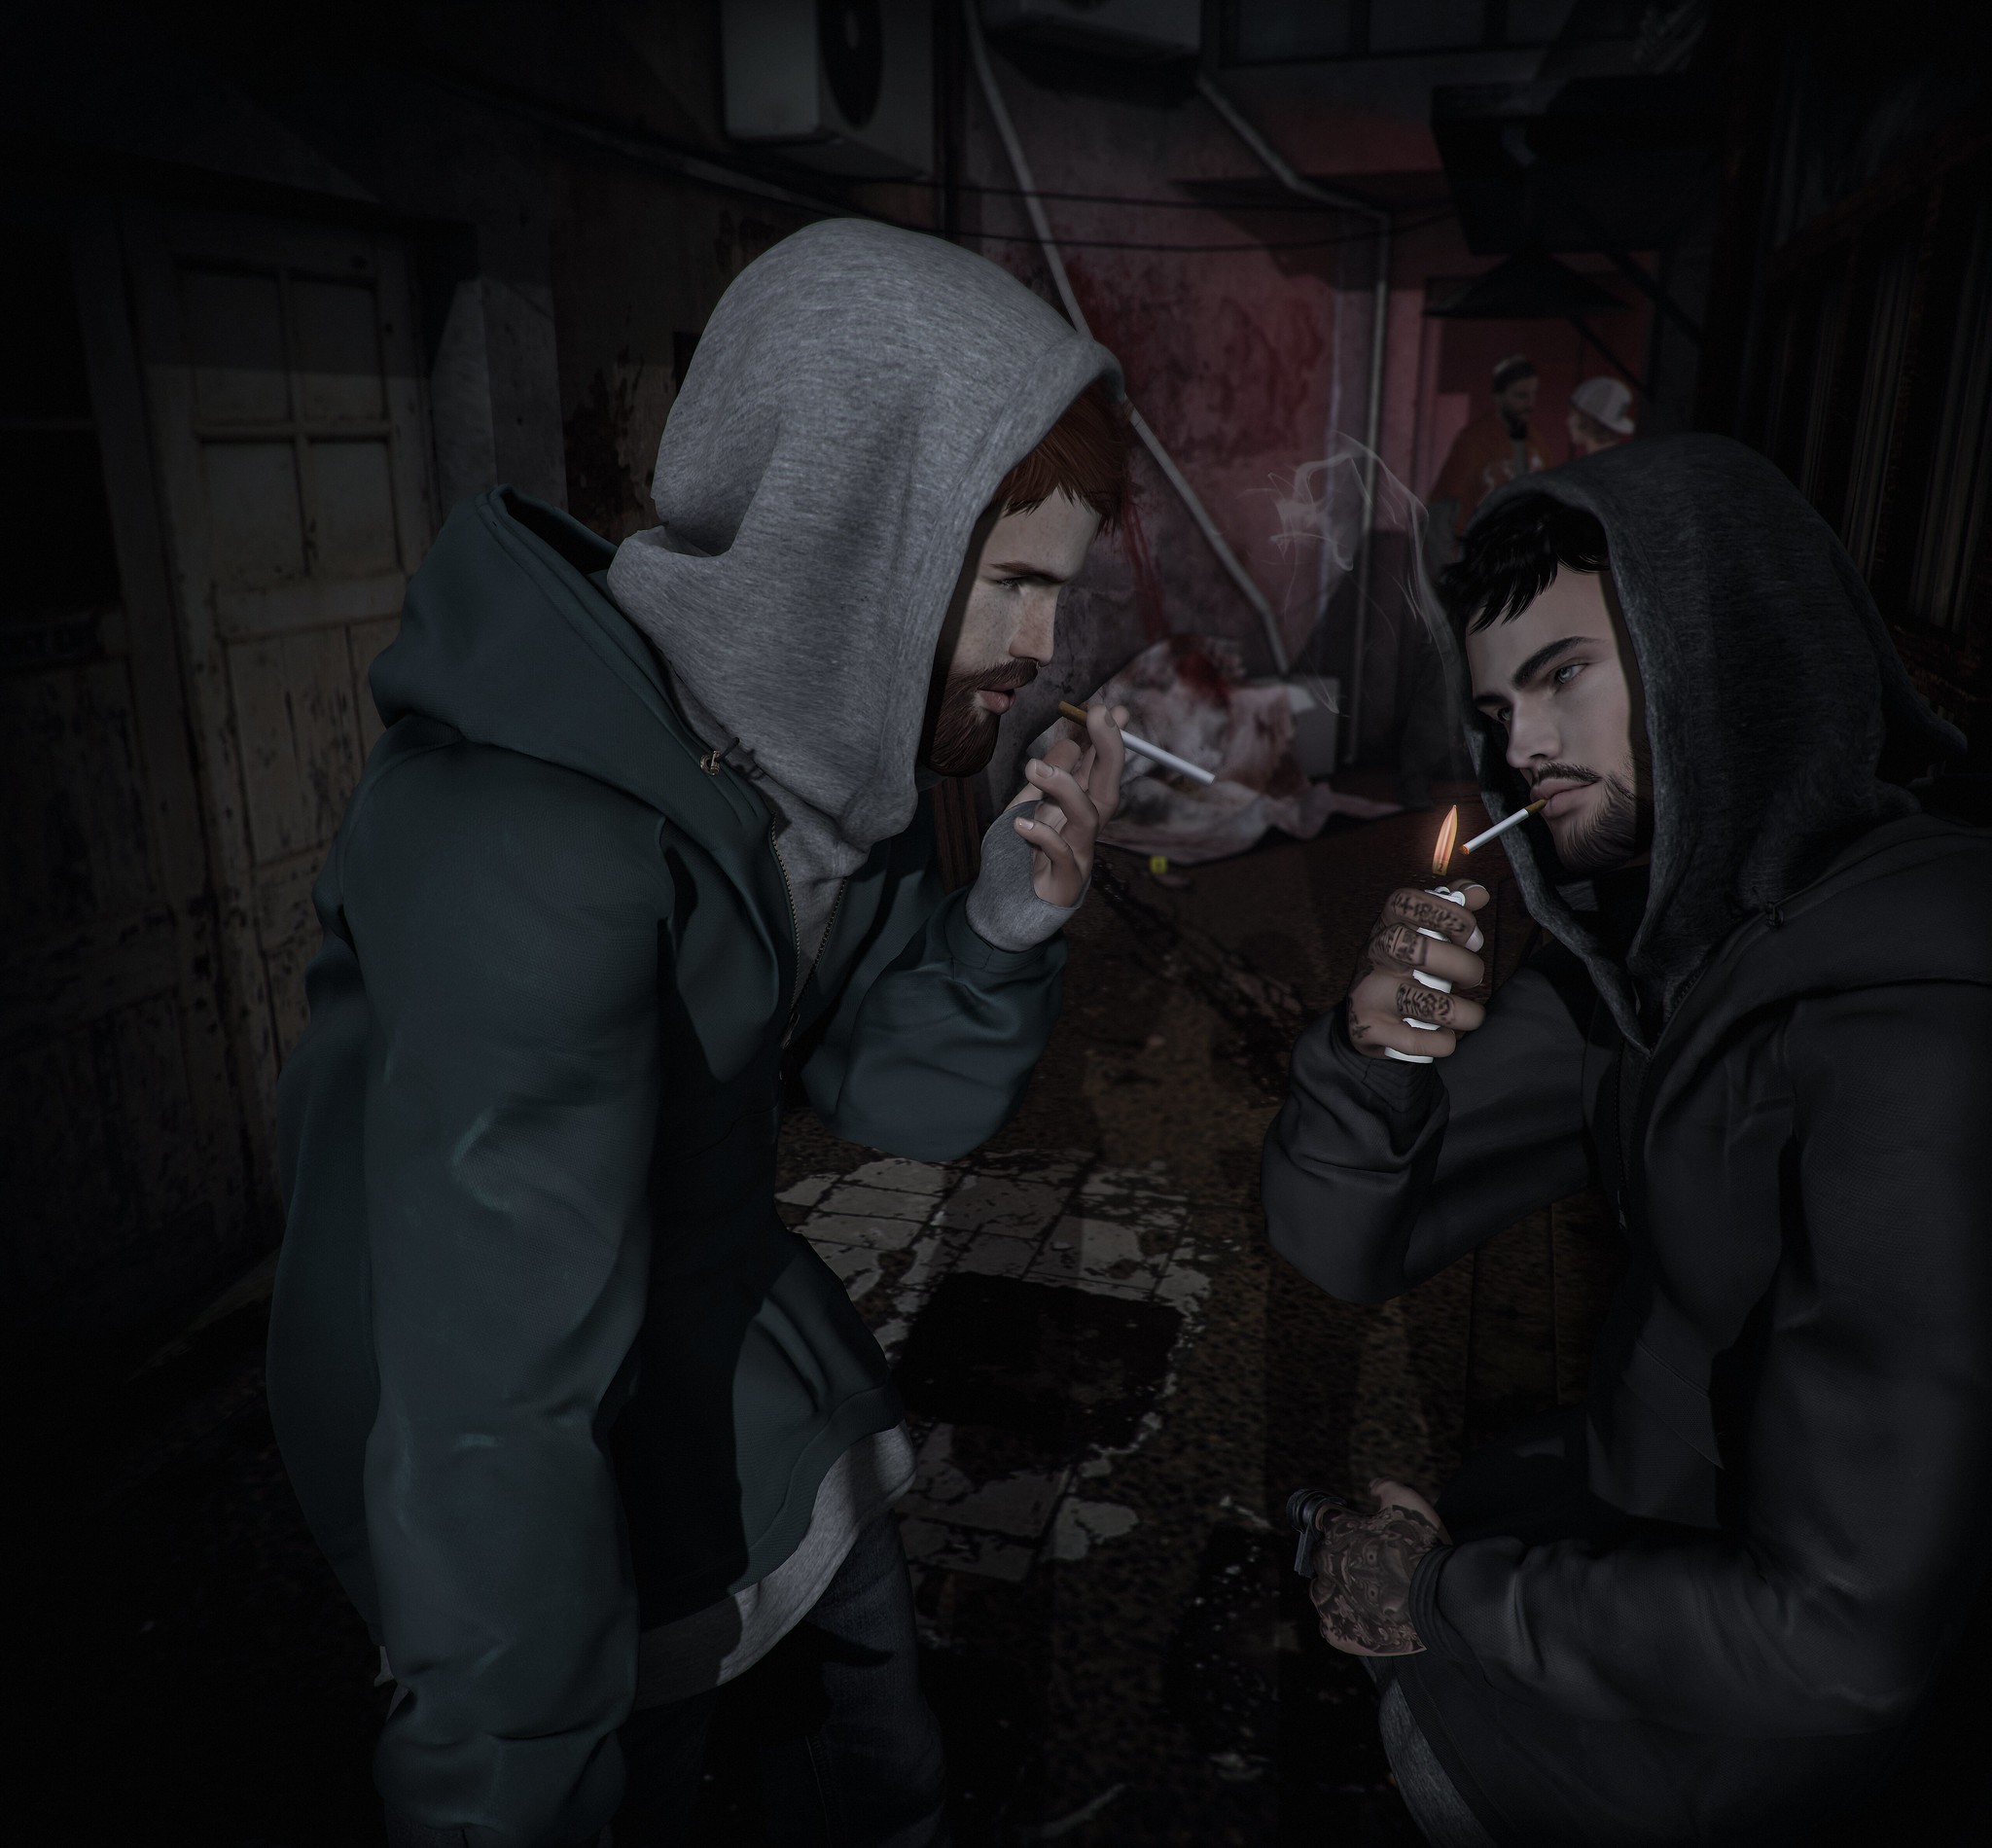 Thugs in a dark alley.